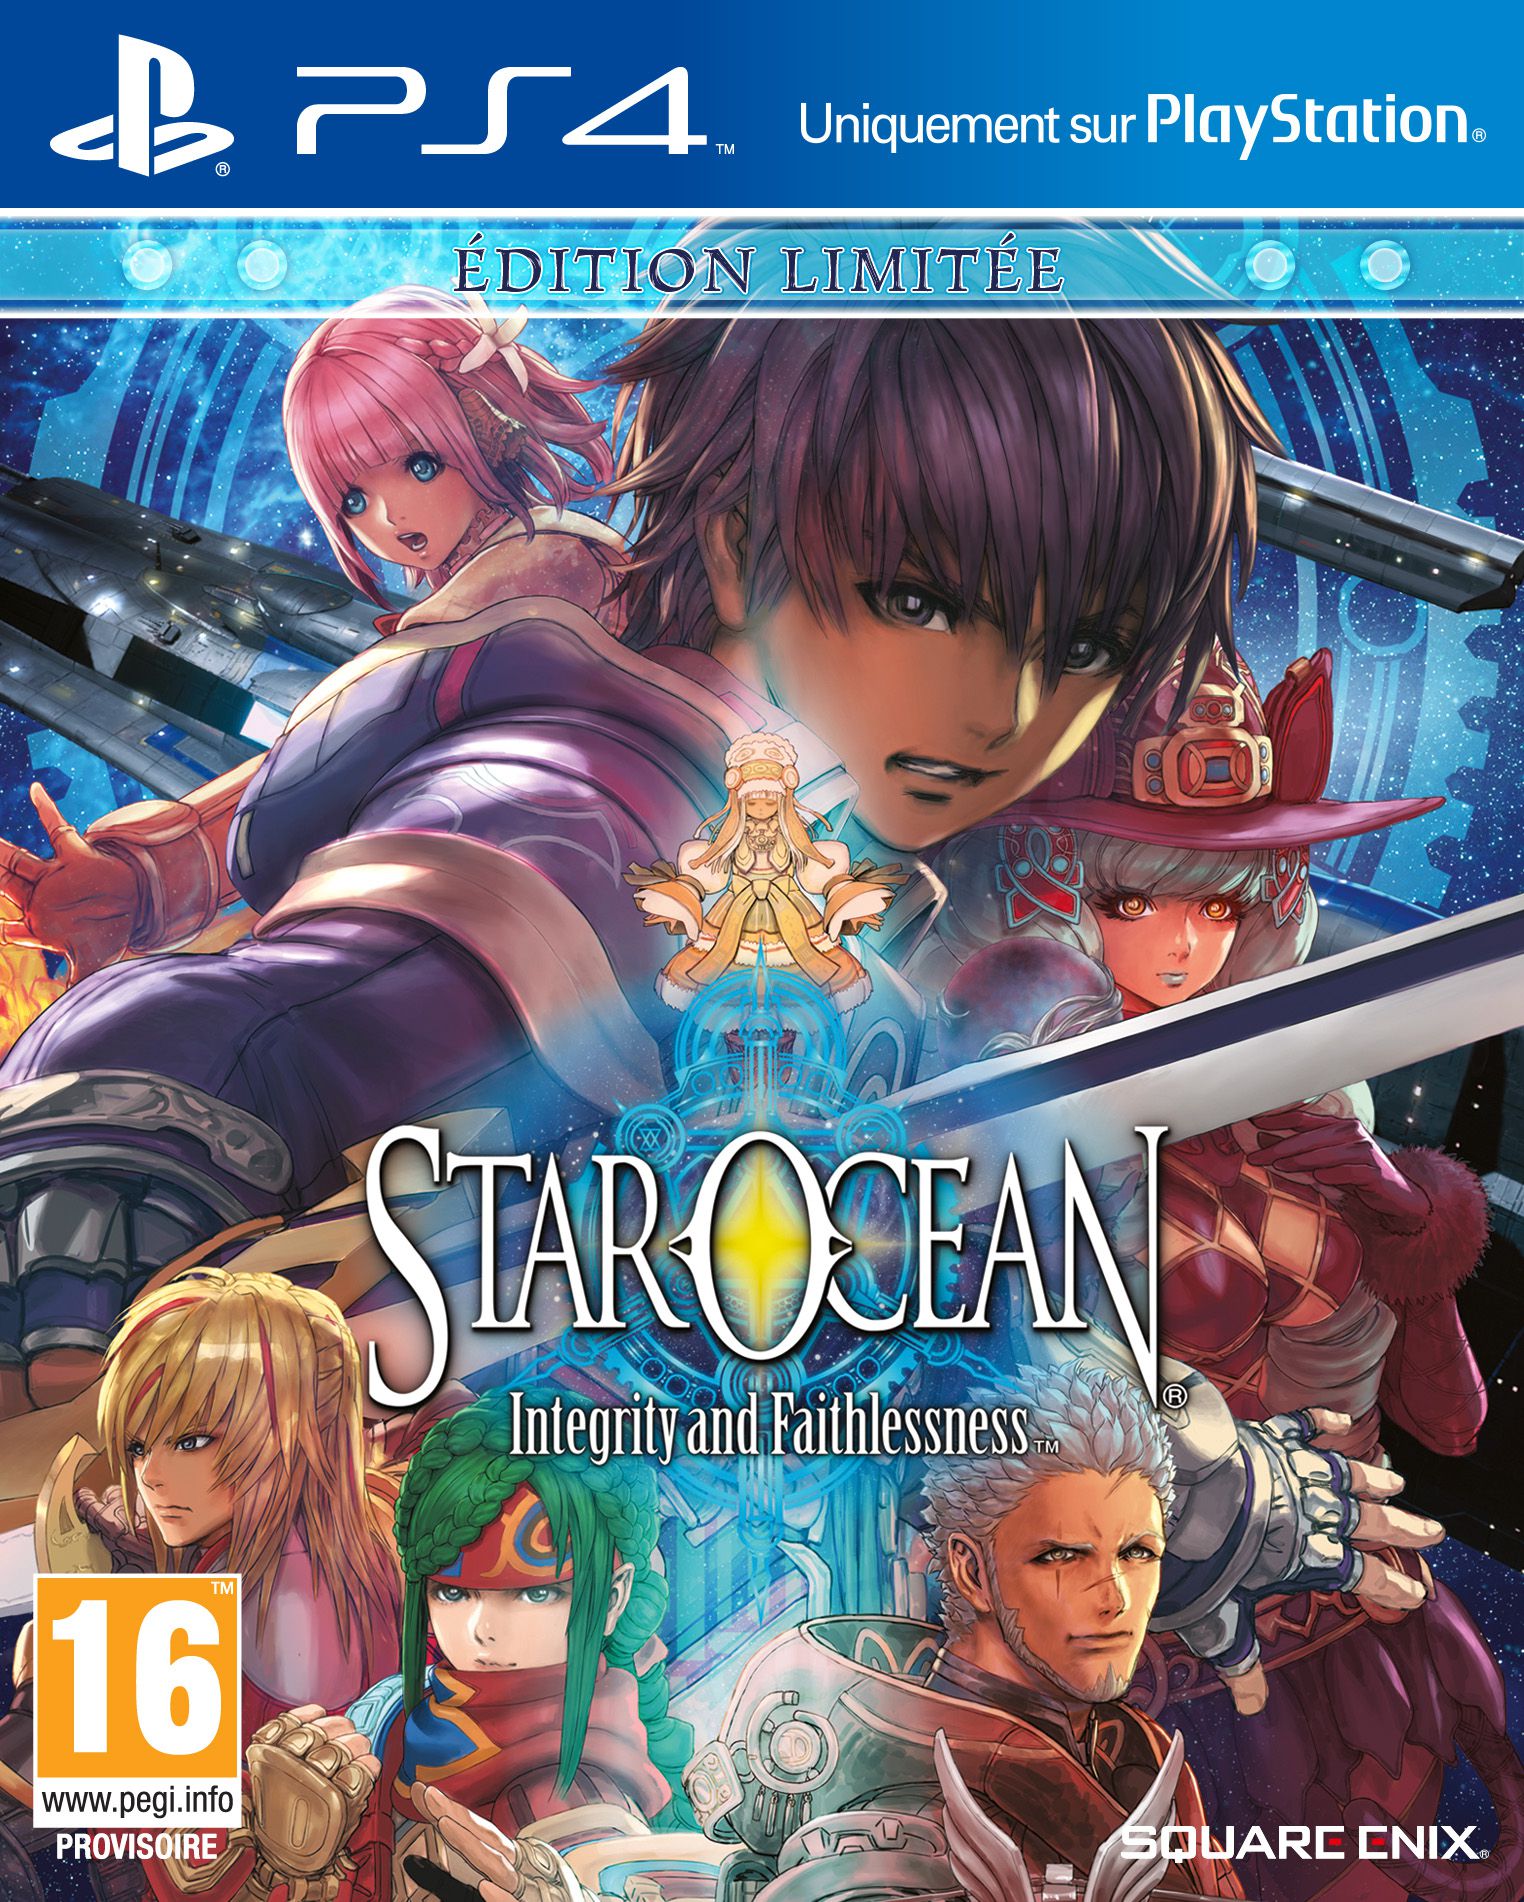 Star Ocean 5 - edition limitee